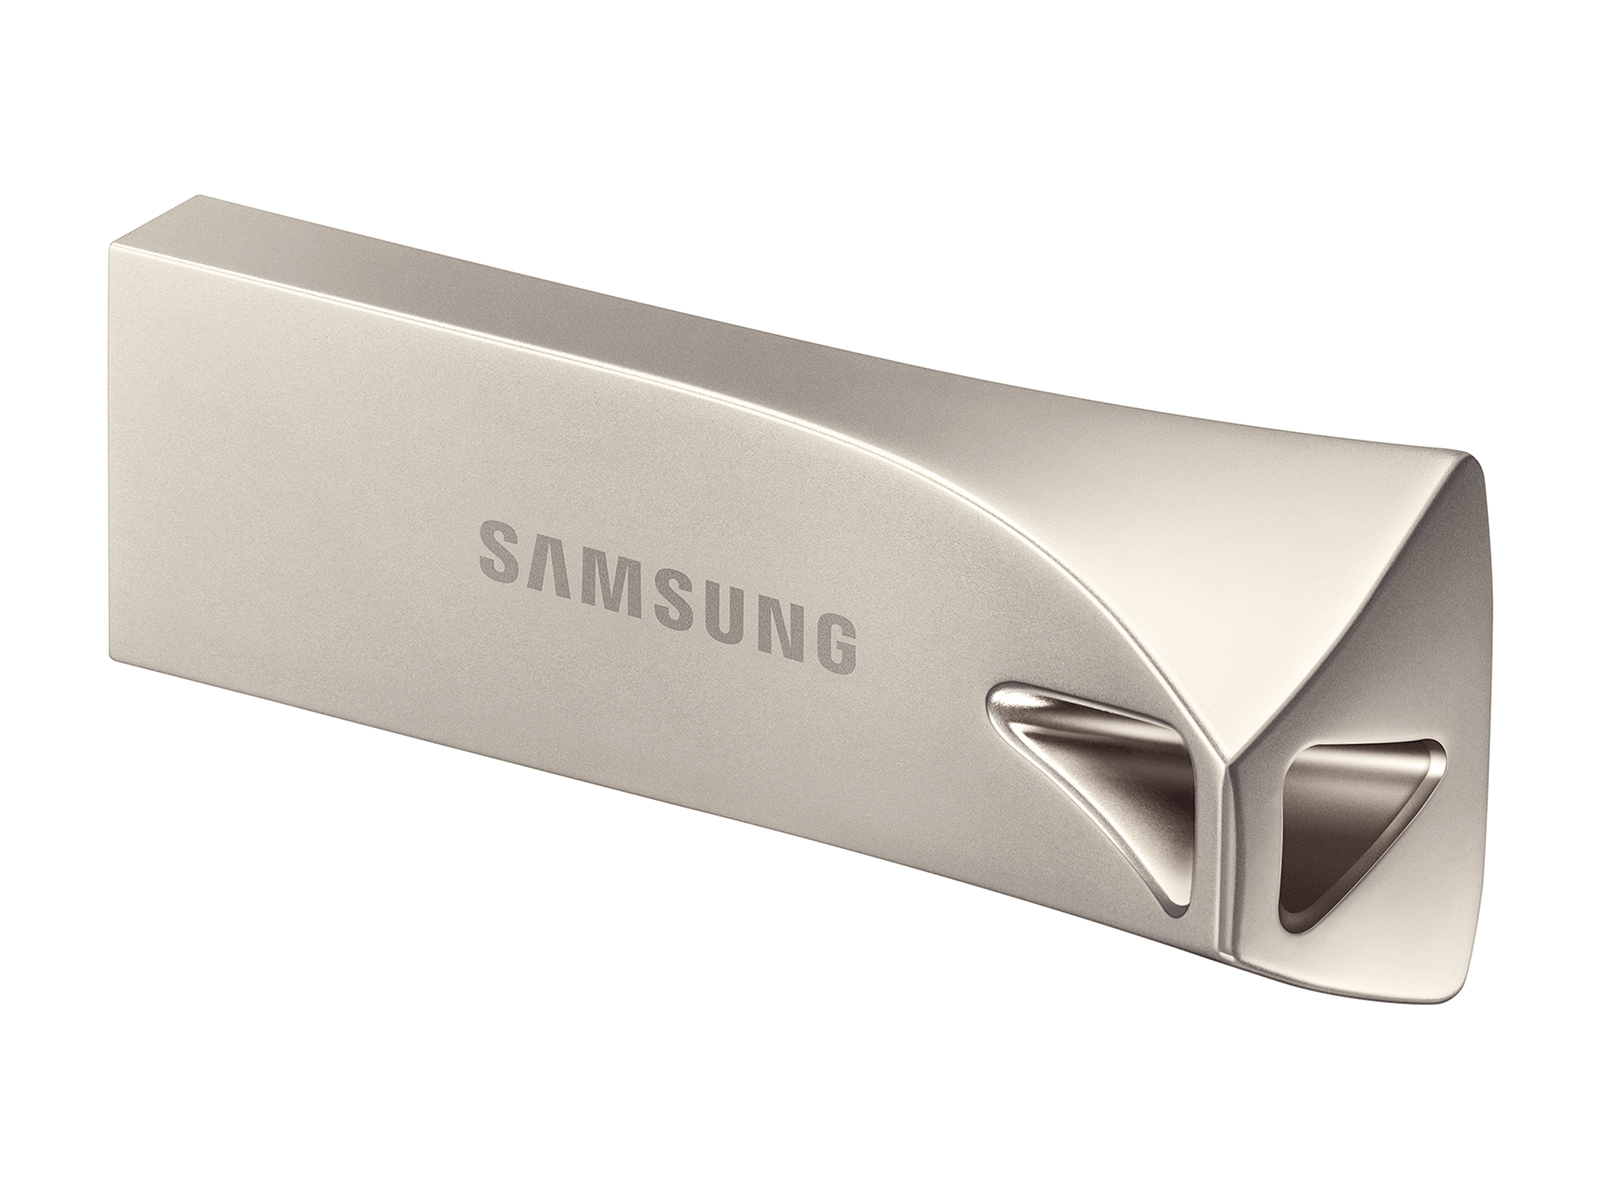 SAMSUNG BAR PLUS 256Go USB 3.1 Champagne Silver (P)